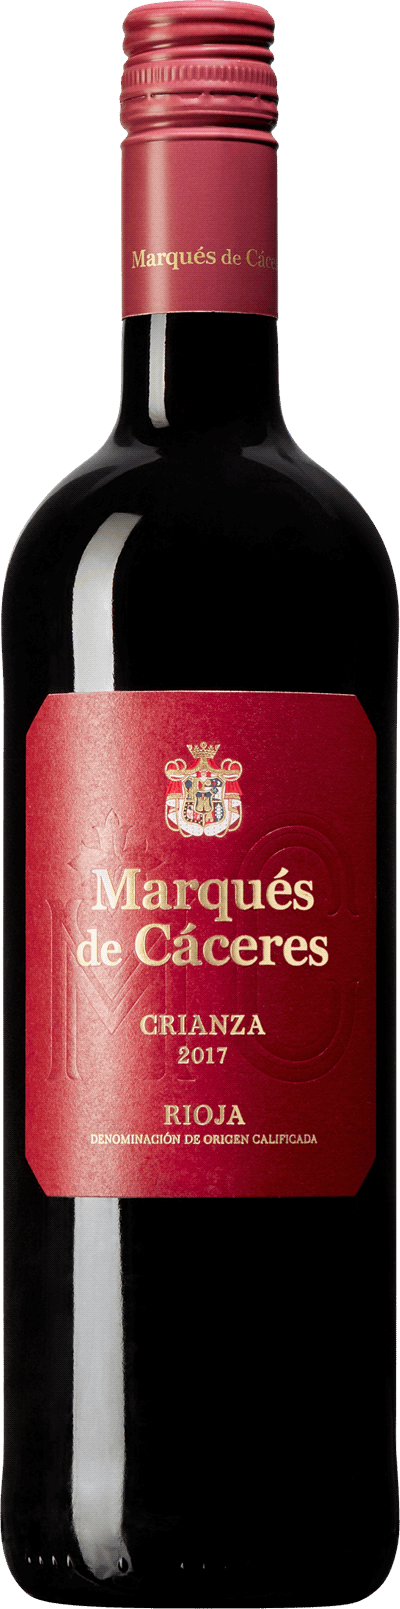 Produktbild för Marqués de Cáceres